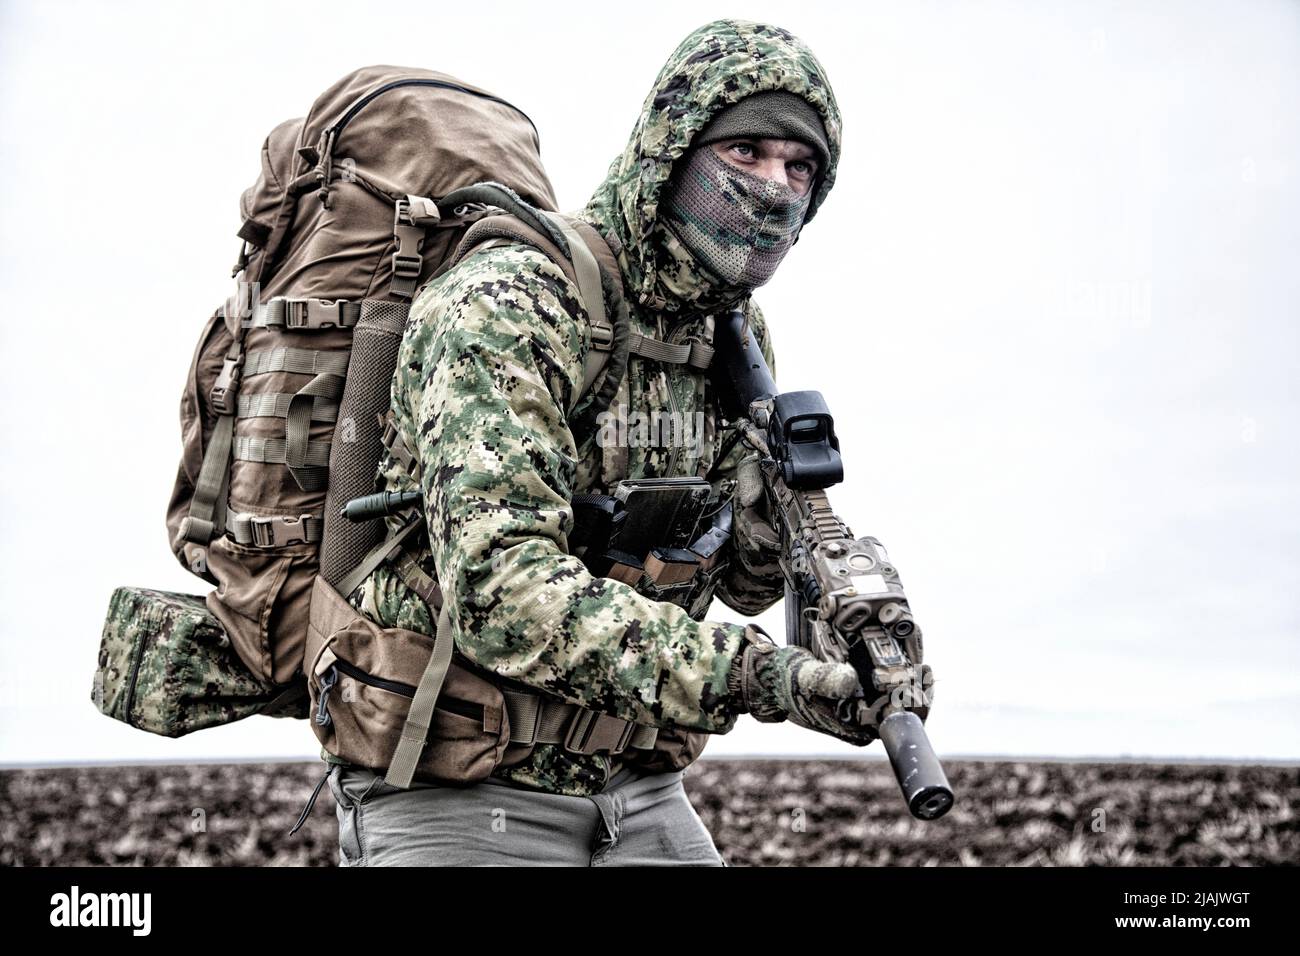 Military mercenary wearing hooded camo jacket and backpack, walking through muddy terrain. Stock Photo